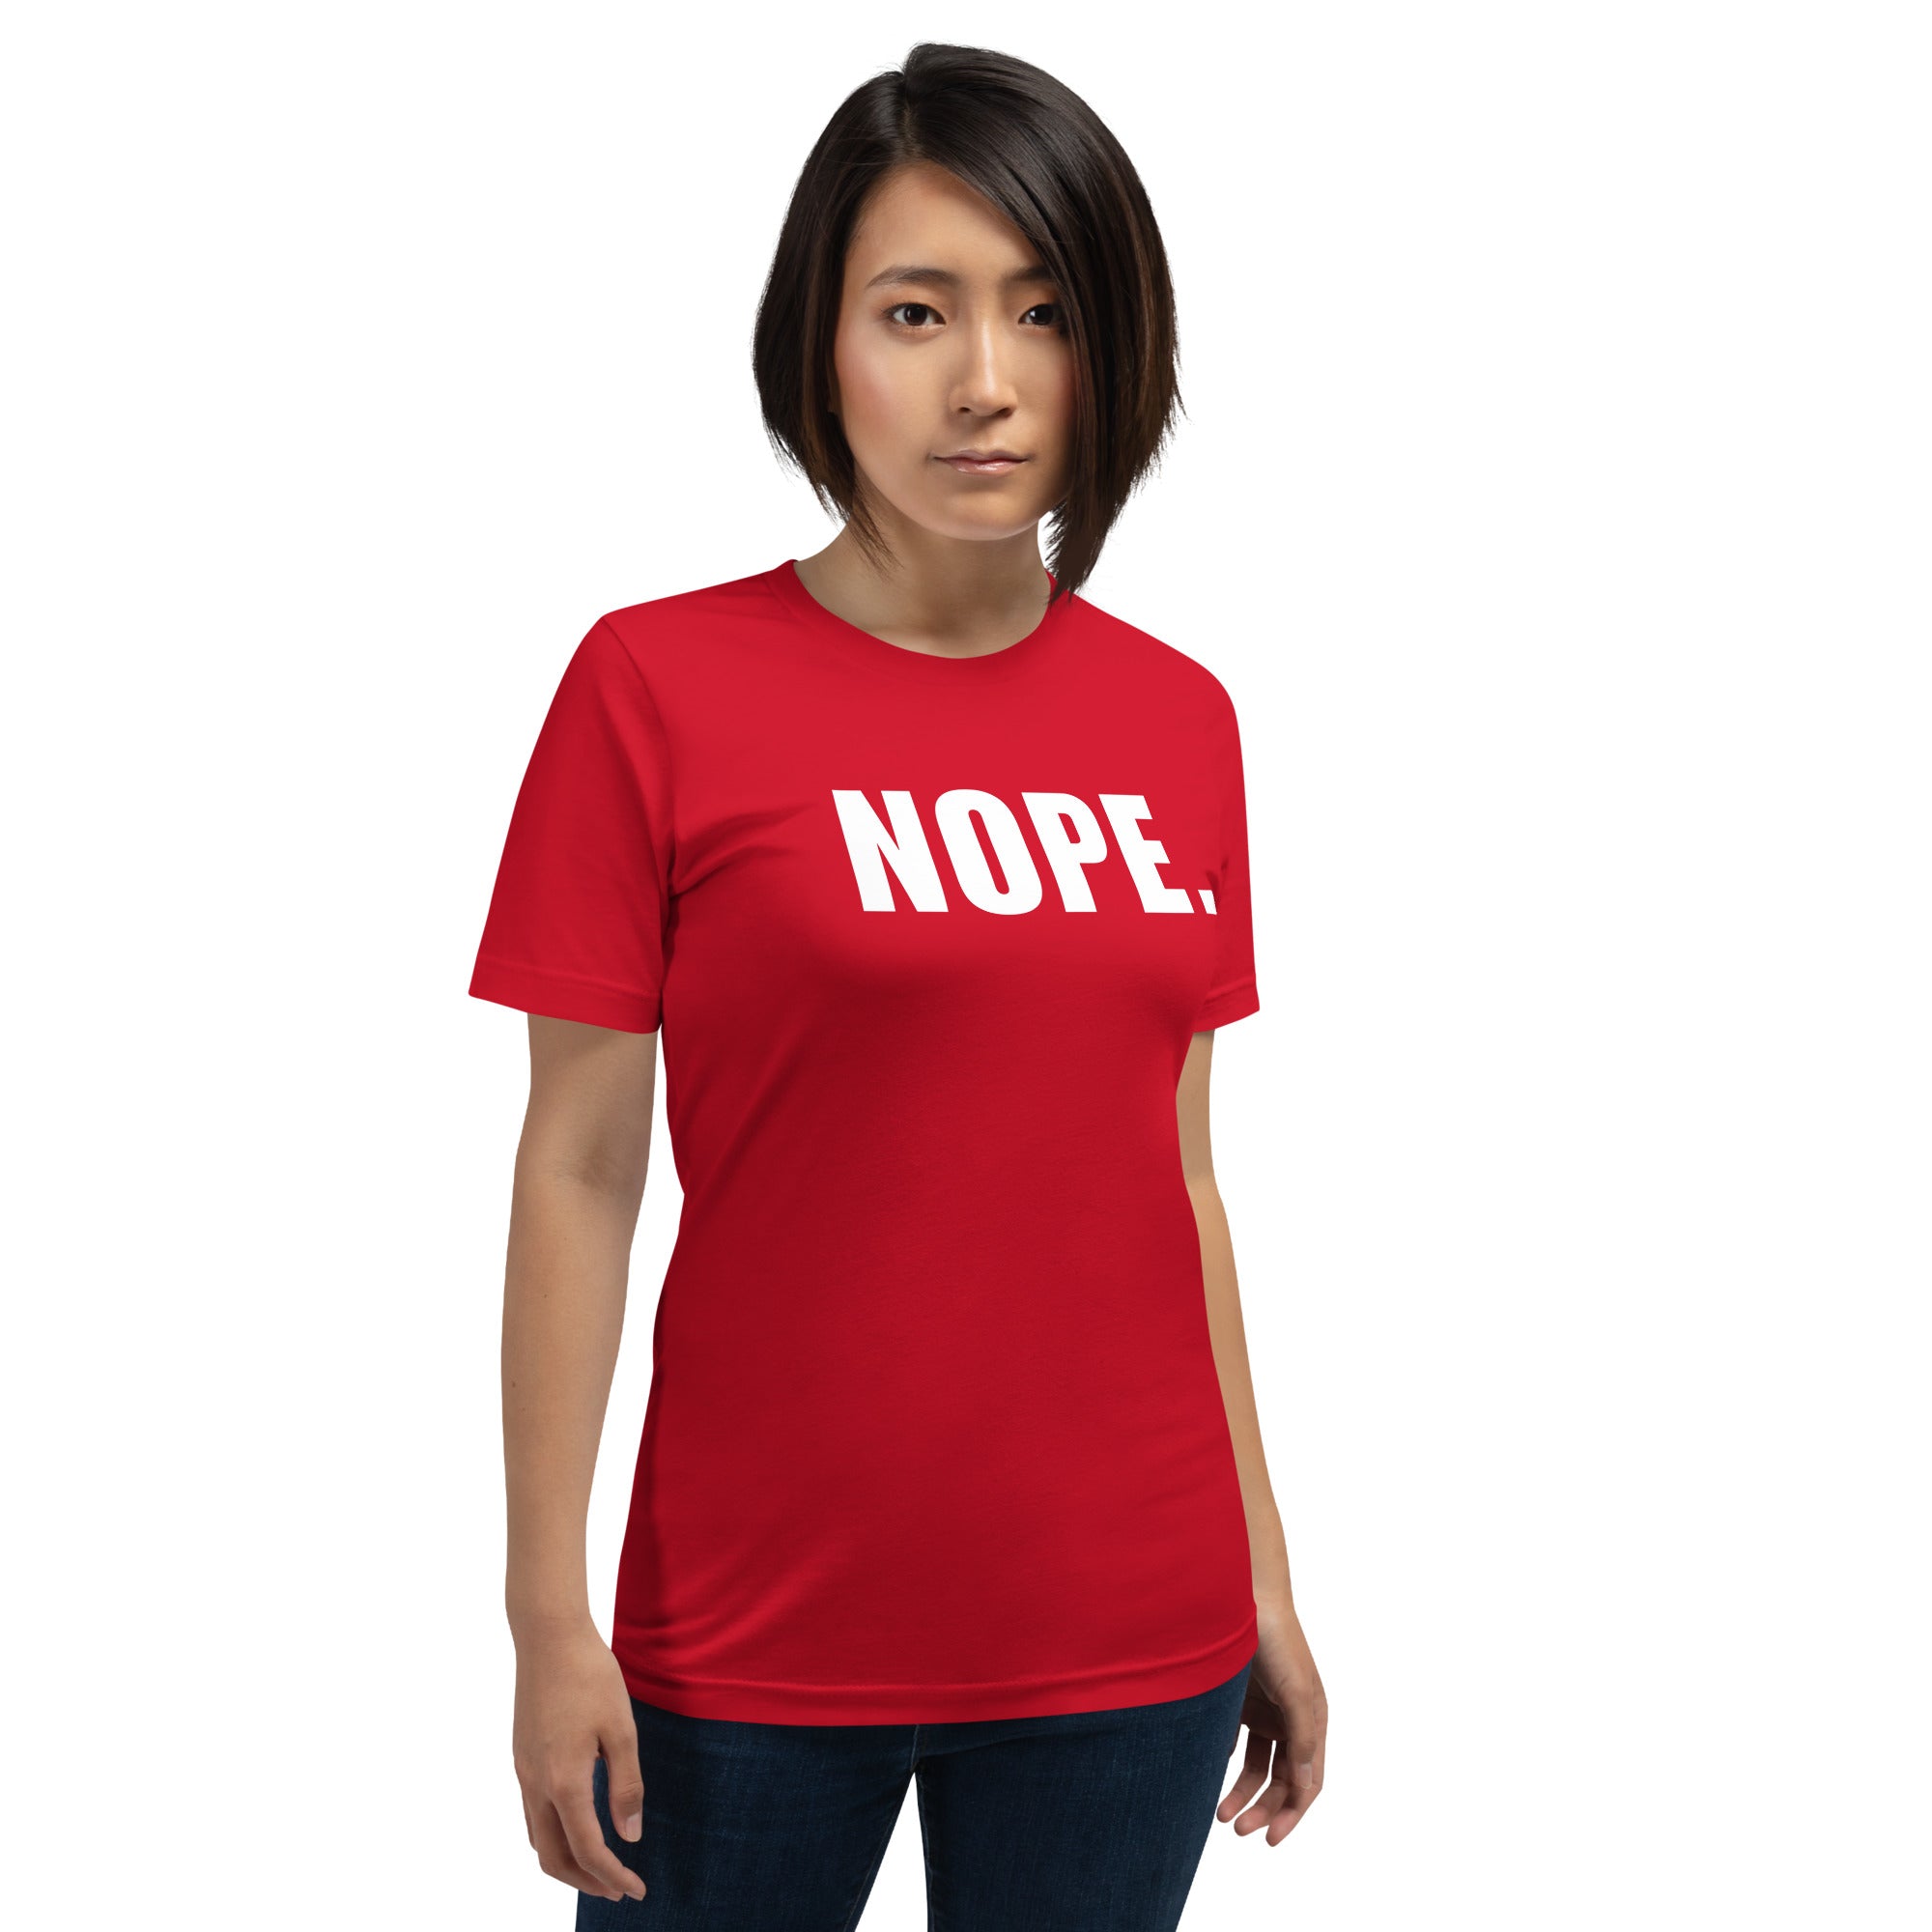 Nope. - Unisex T-Shirt